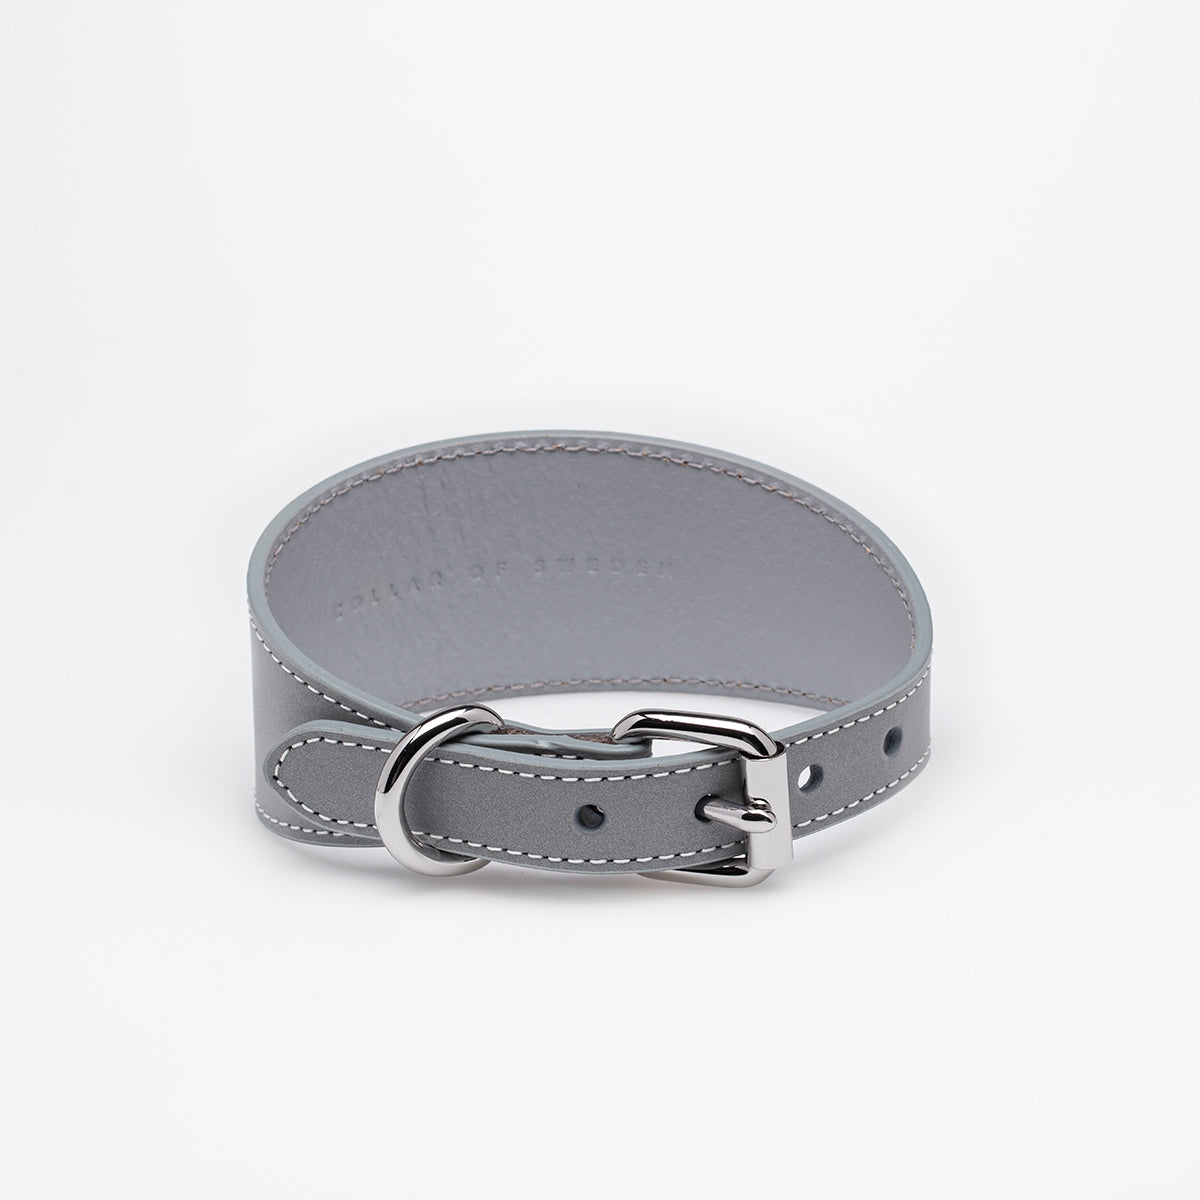 image - Reflex Leather Collar XL Wide